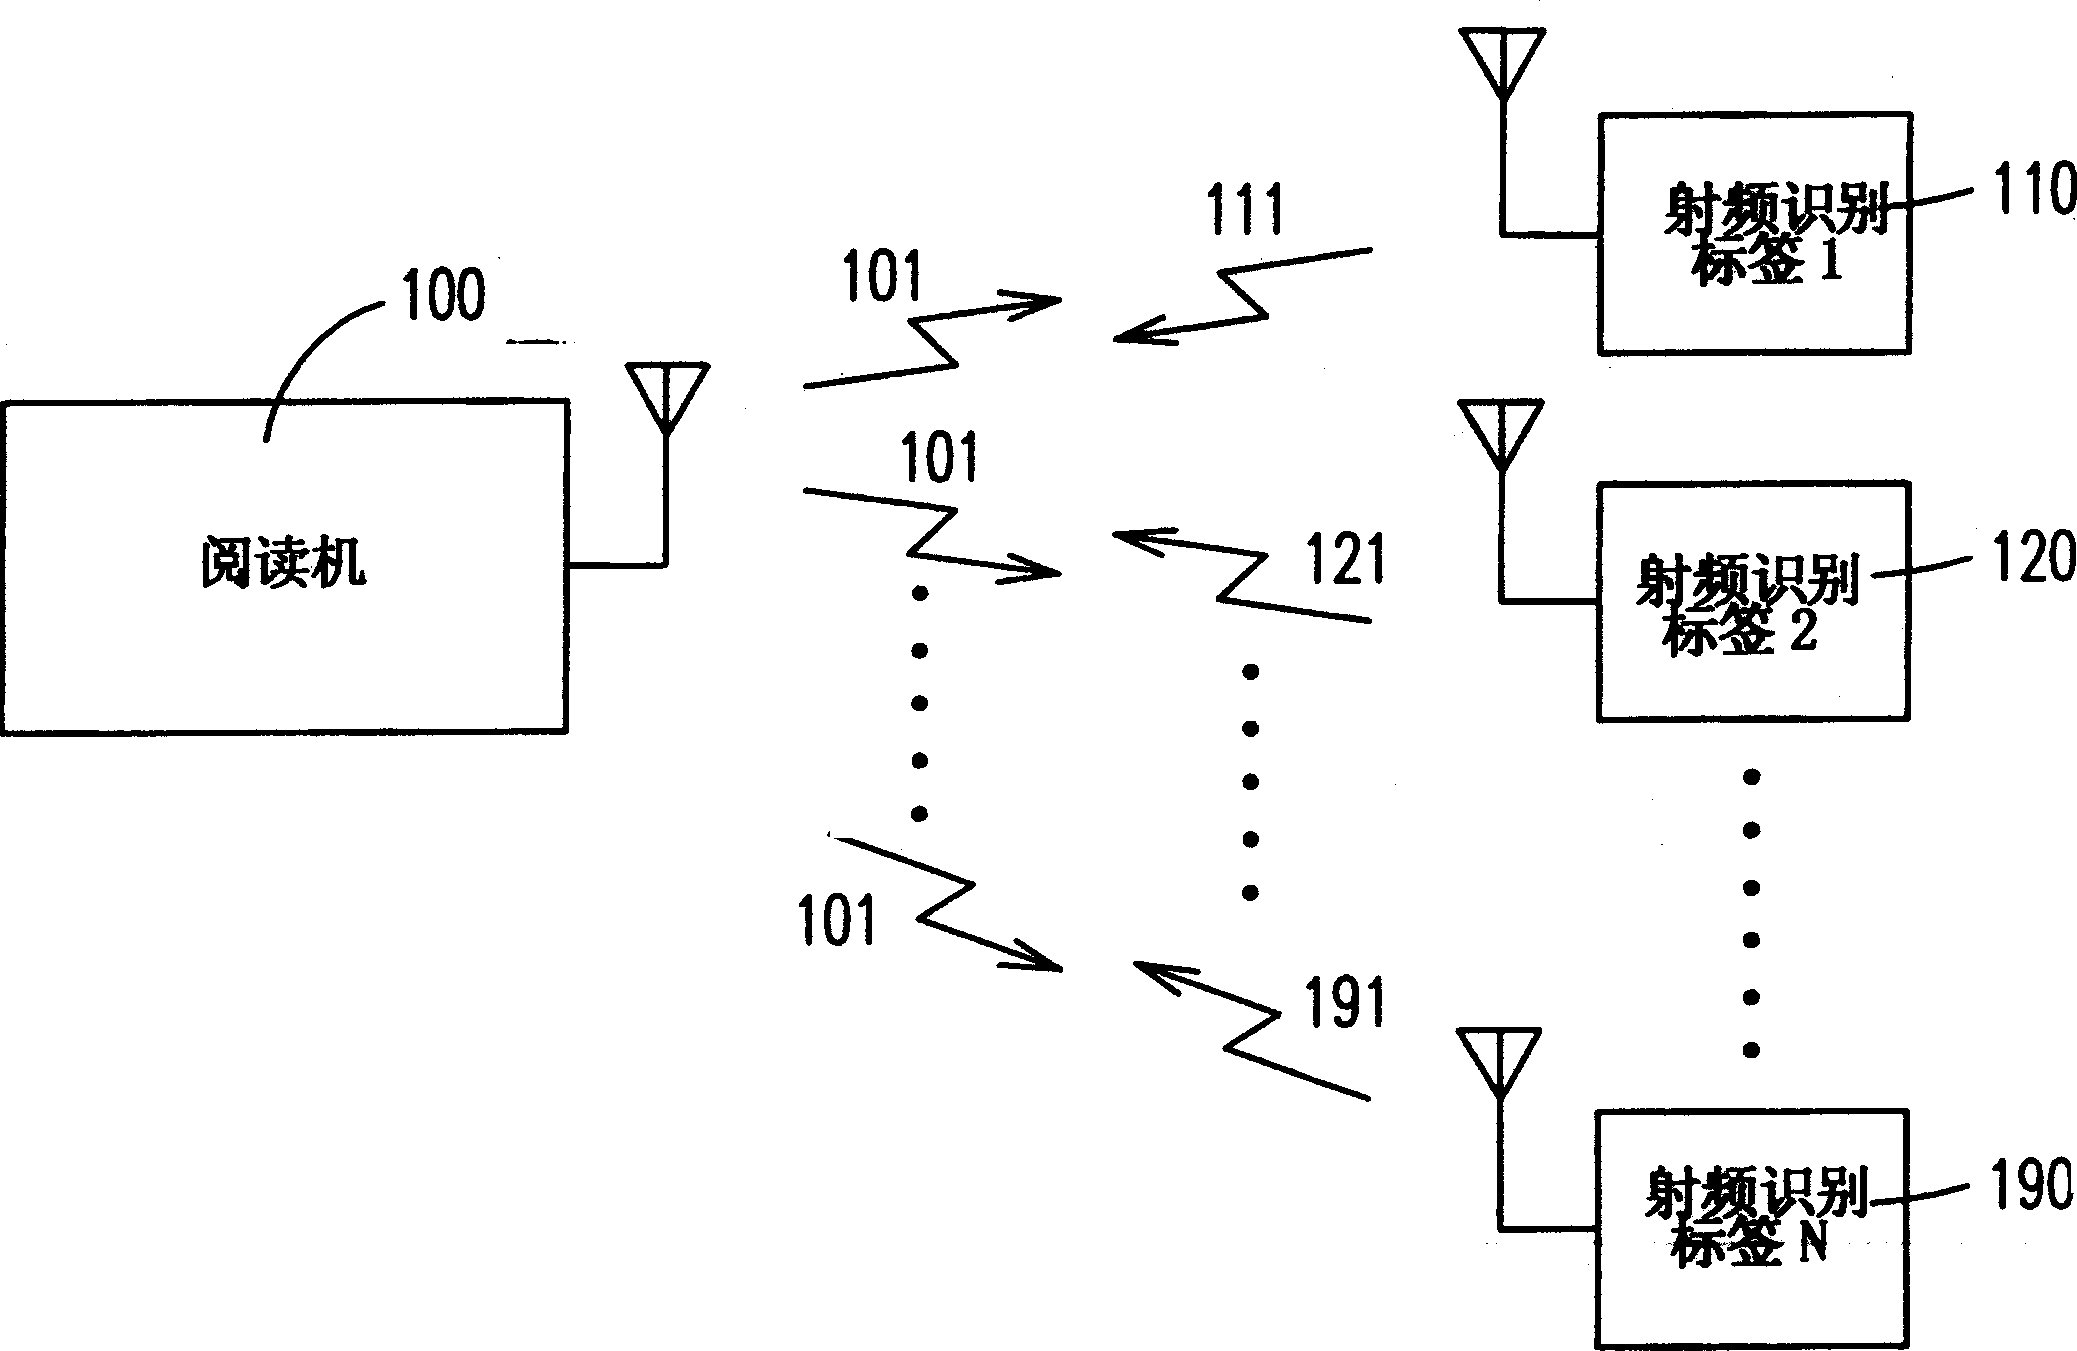 Recognition code transmission method and circuit arrangement